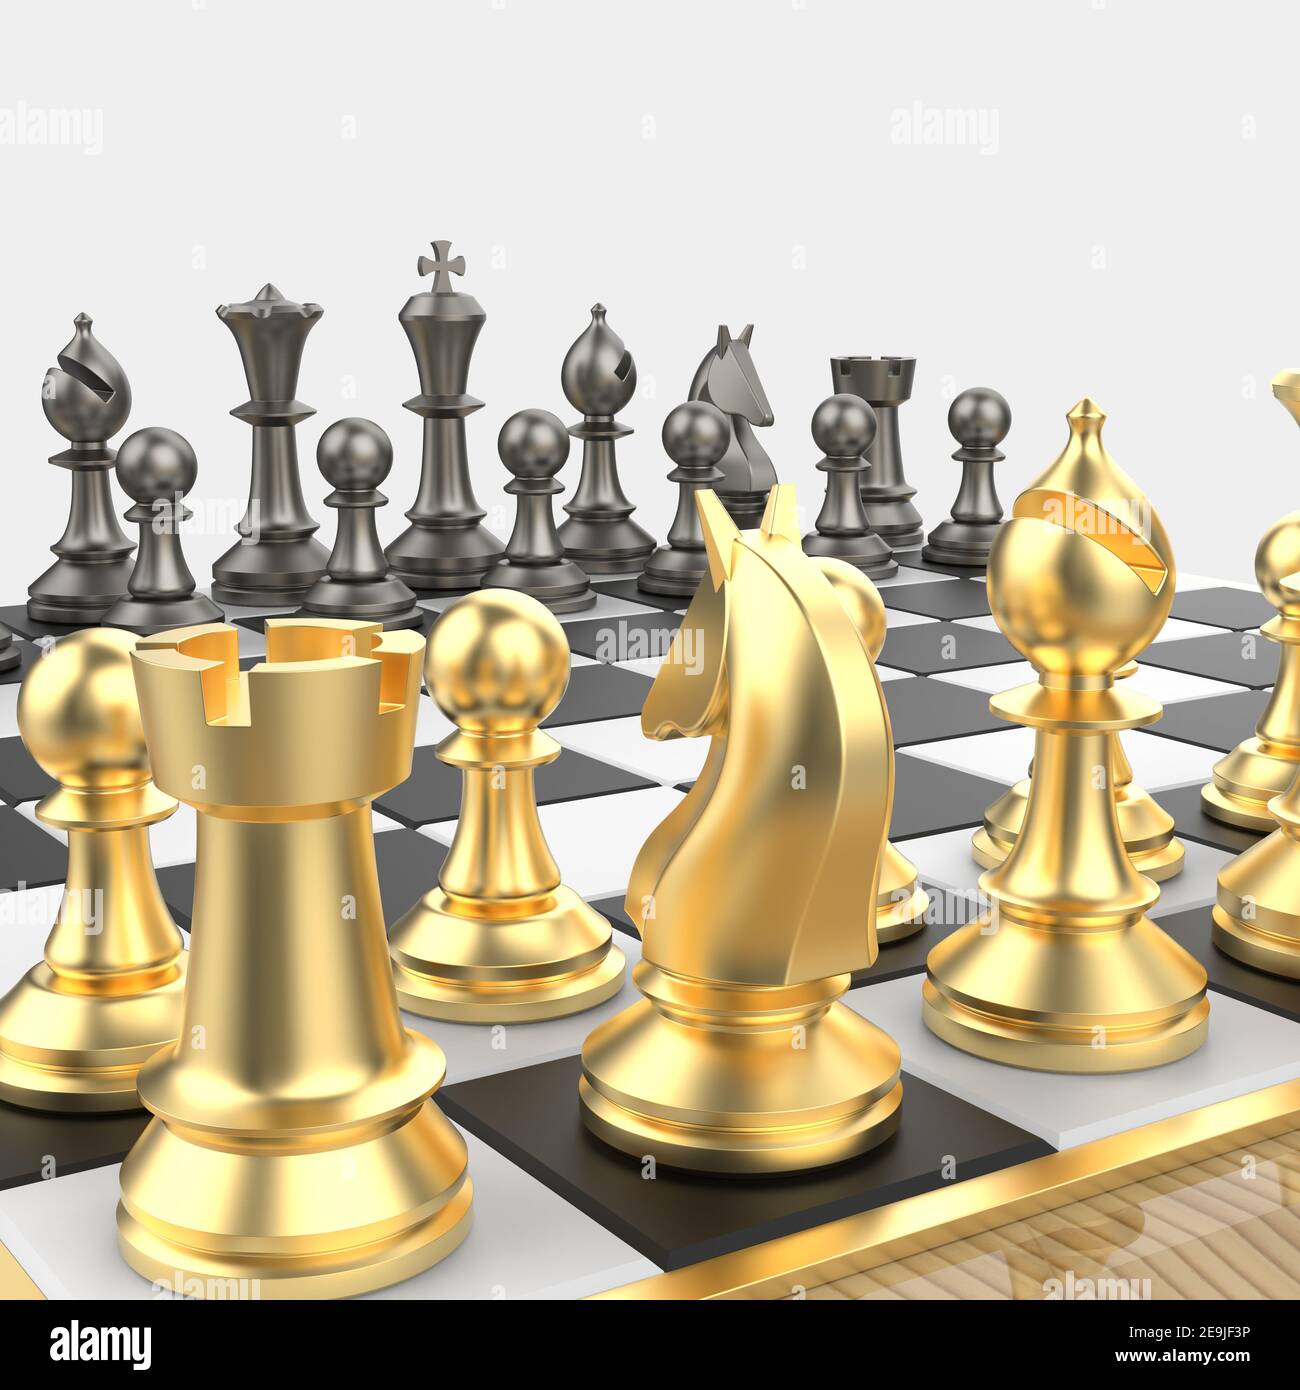 Volumetric chessboard, no figures, 3d, no background